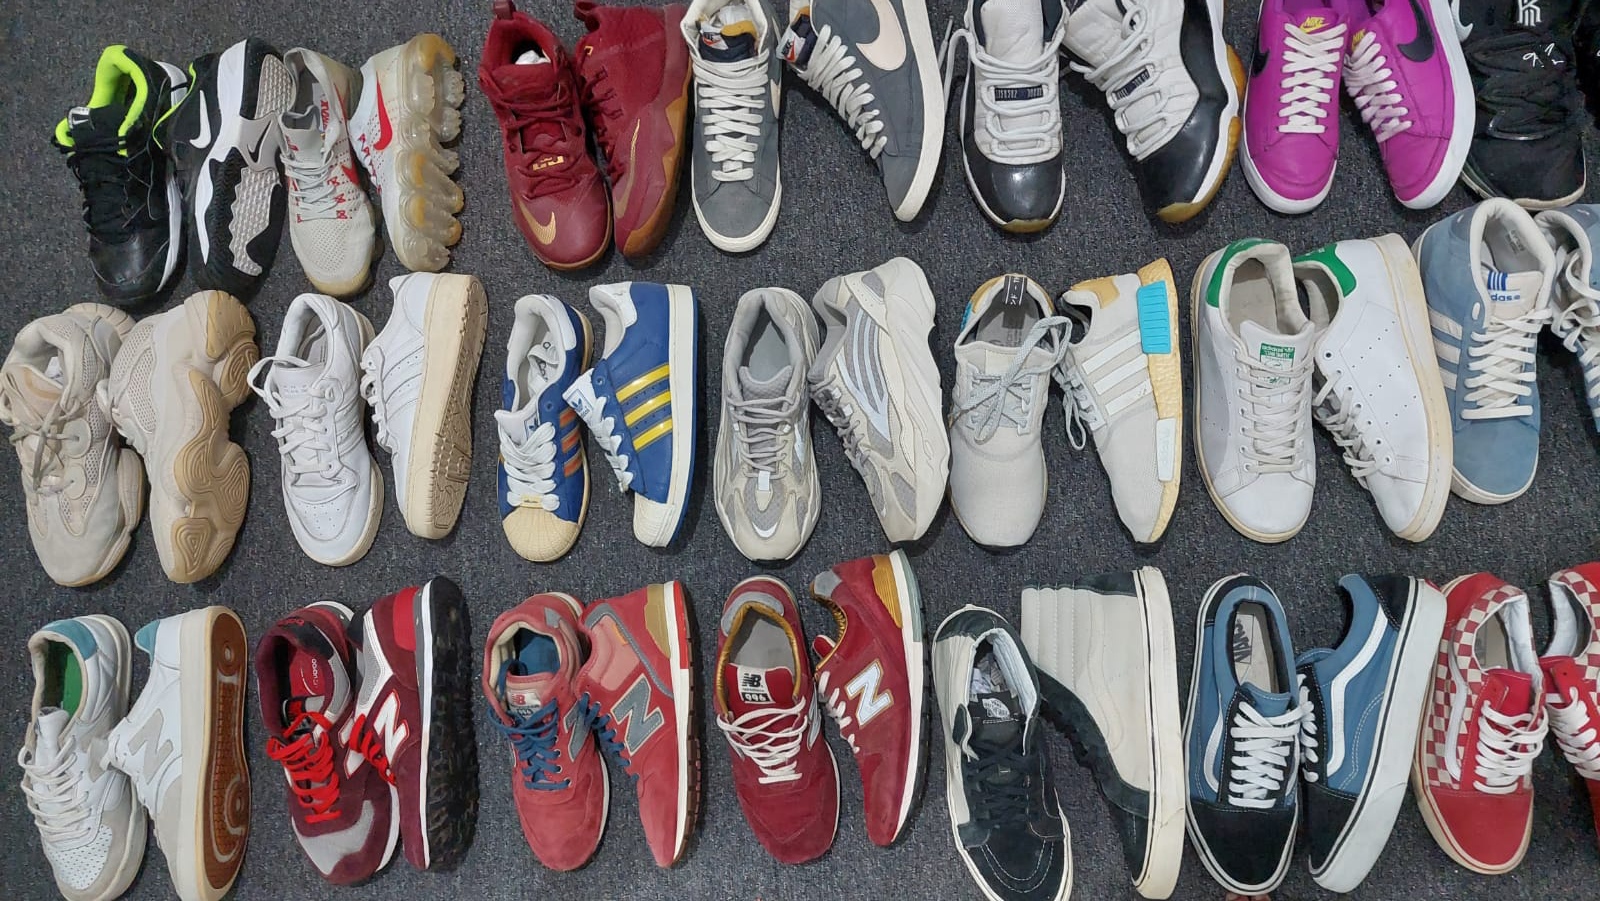 Kemenperin: Maraknya Impor Sepatu Ilegal Bikin Industri Alas Kaki Nasional Gak Berkembang